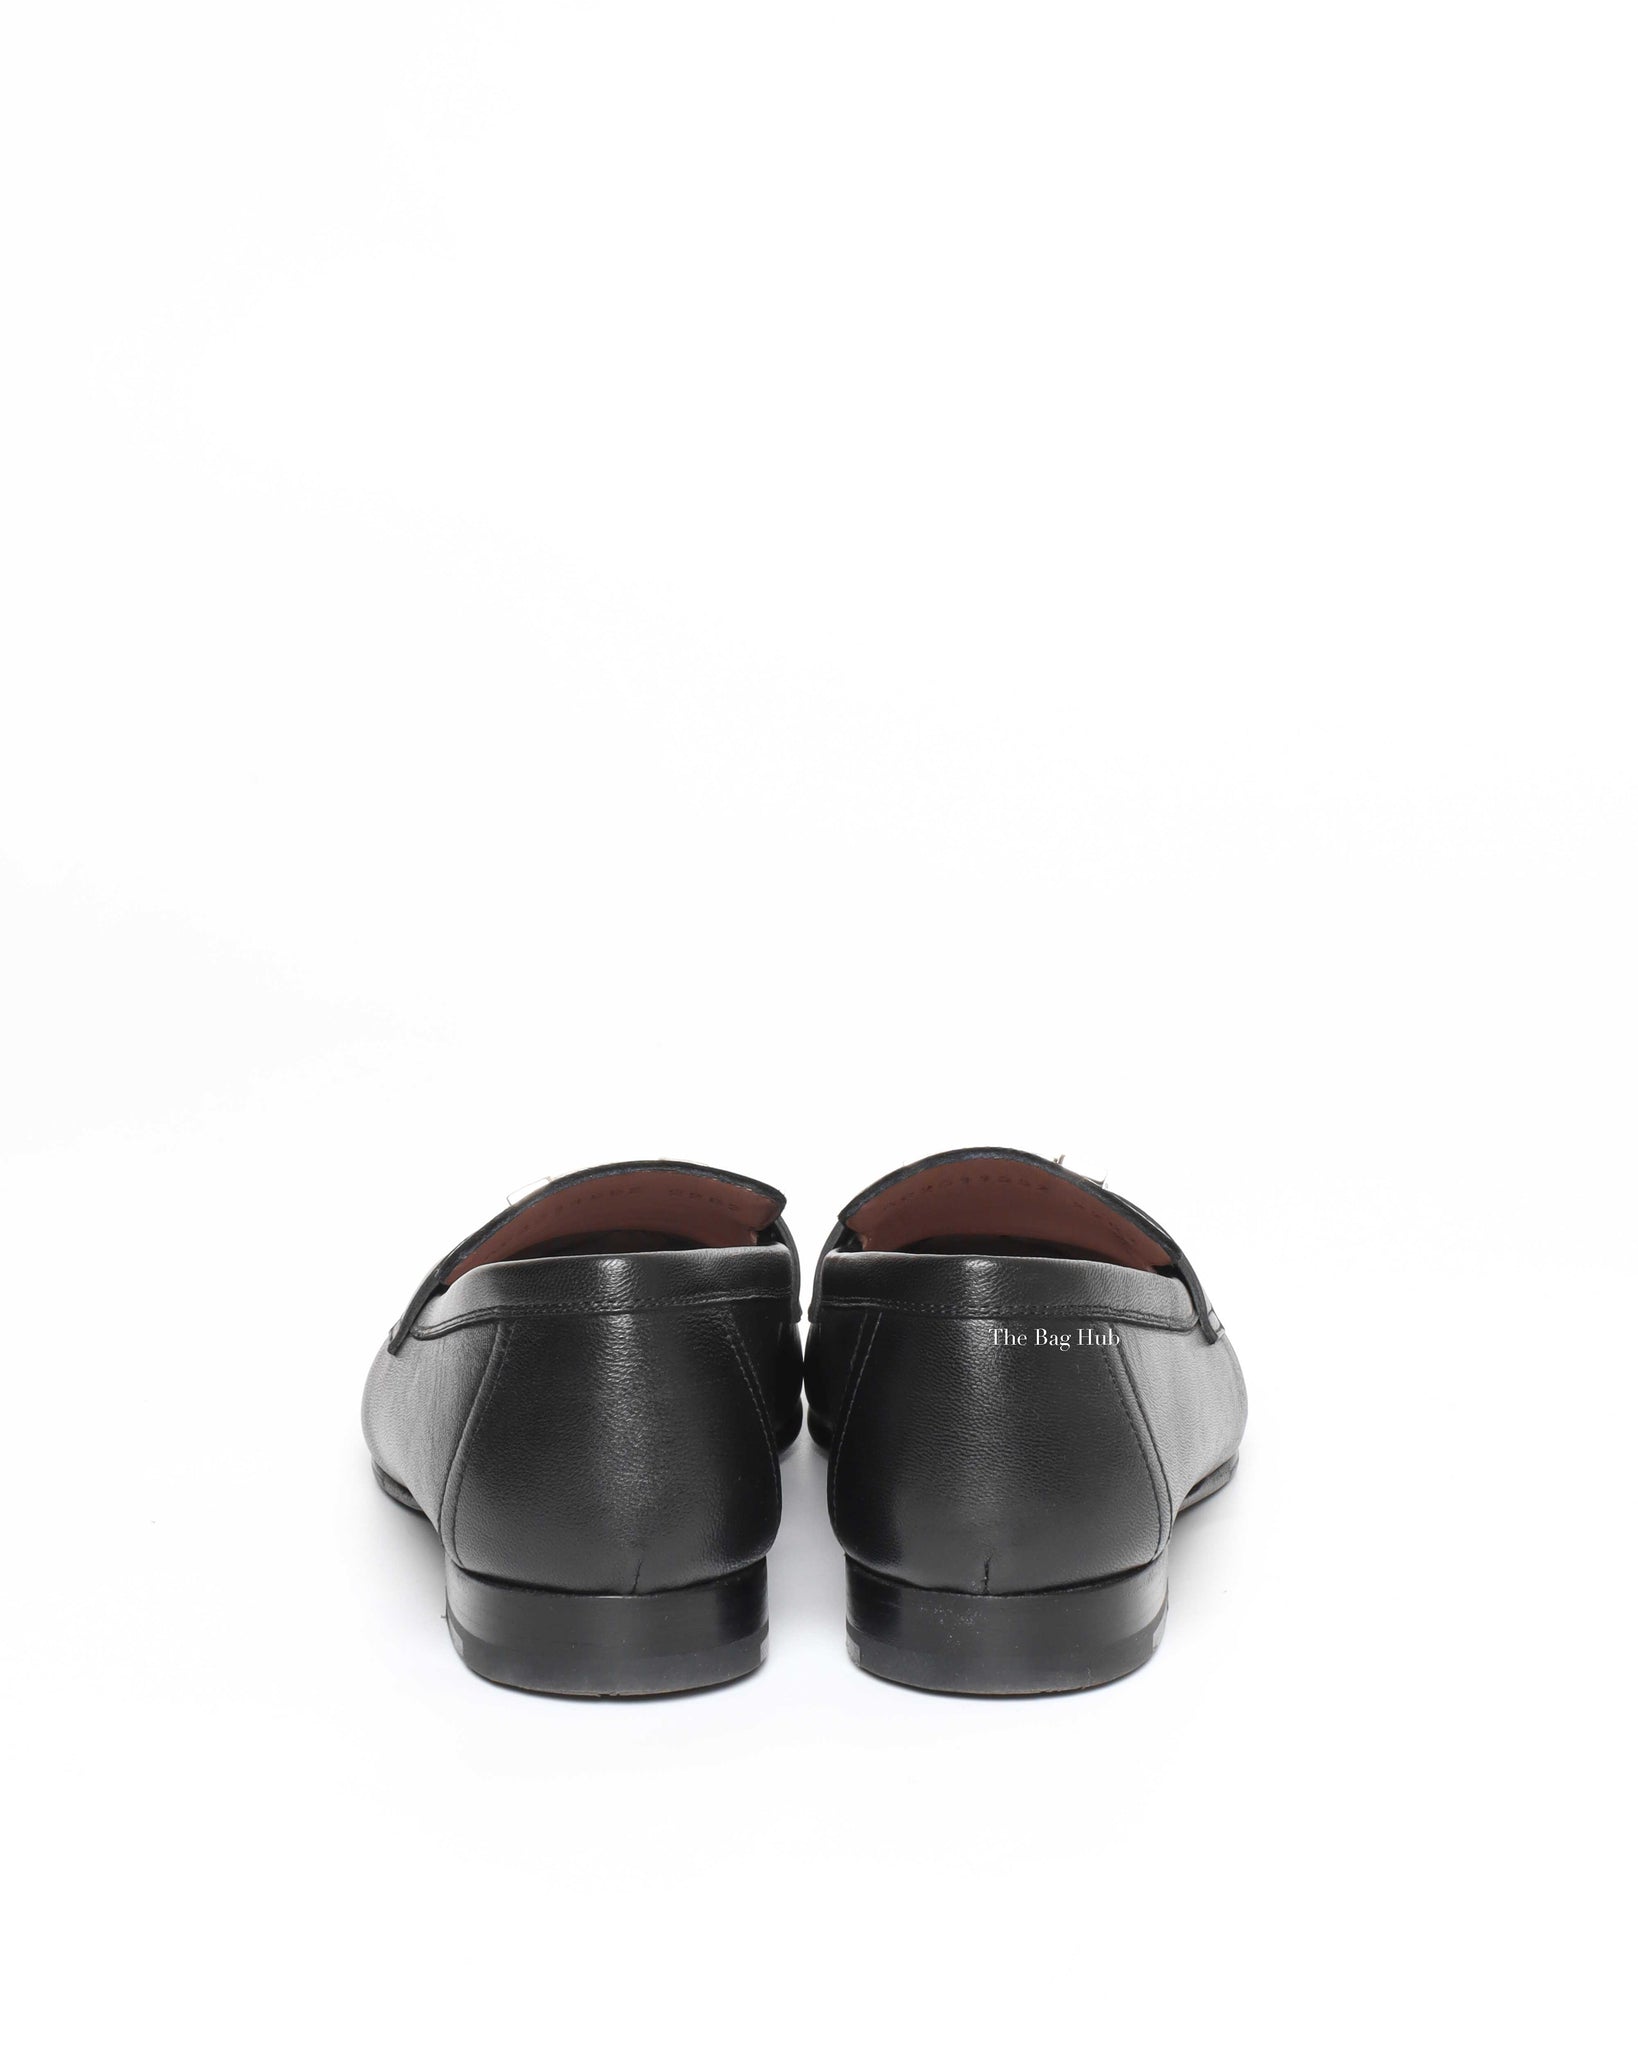 Hermes Black Women's Paris Loafers SHW Size 37-7